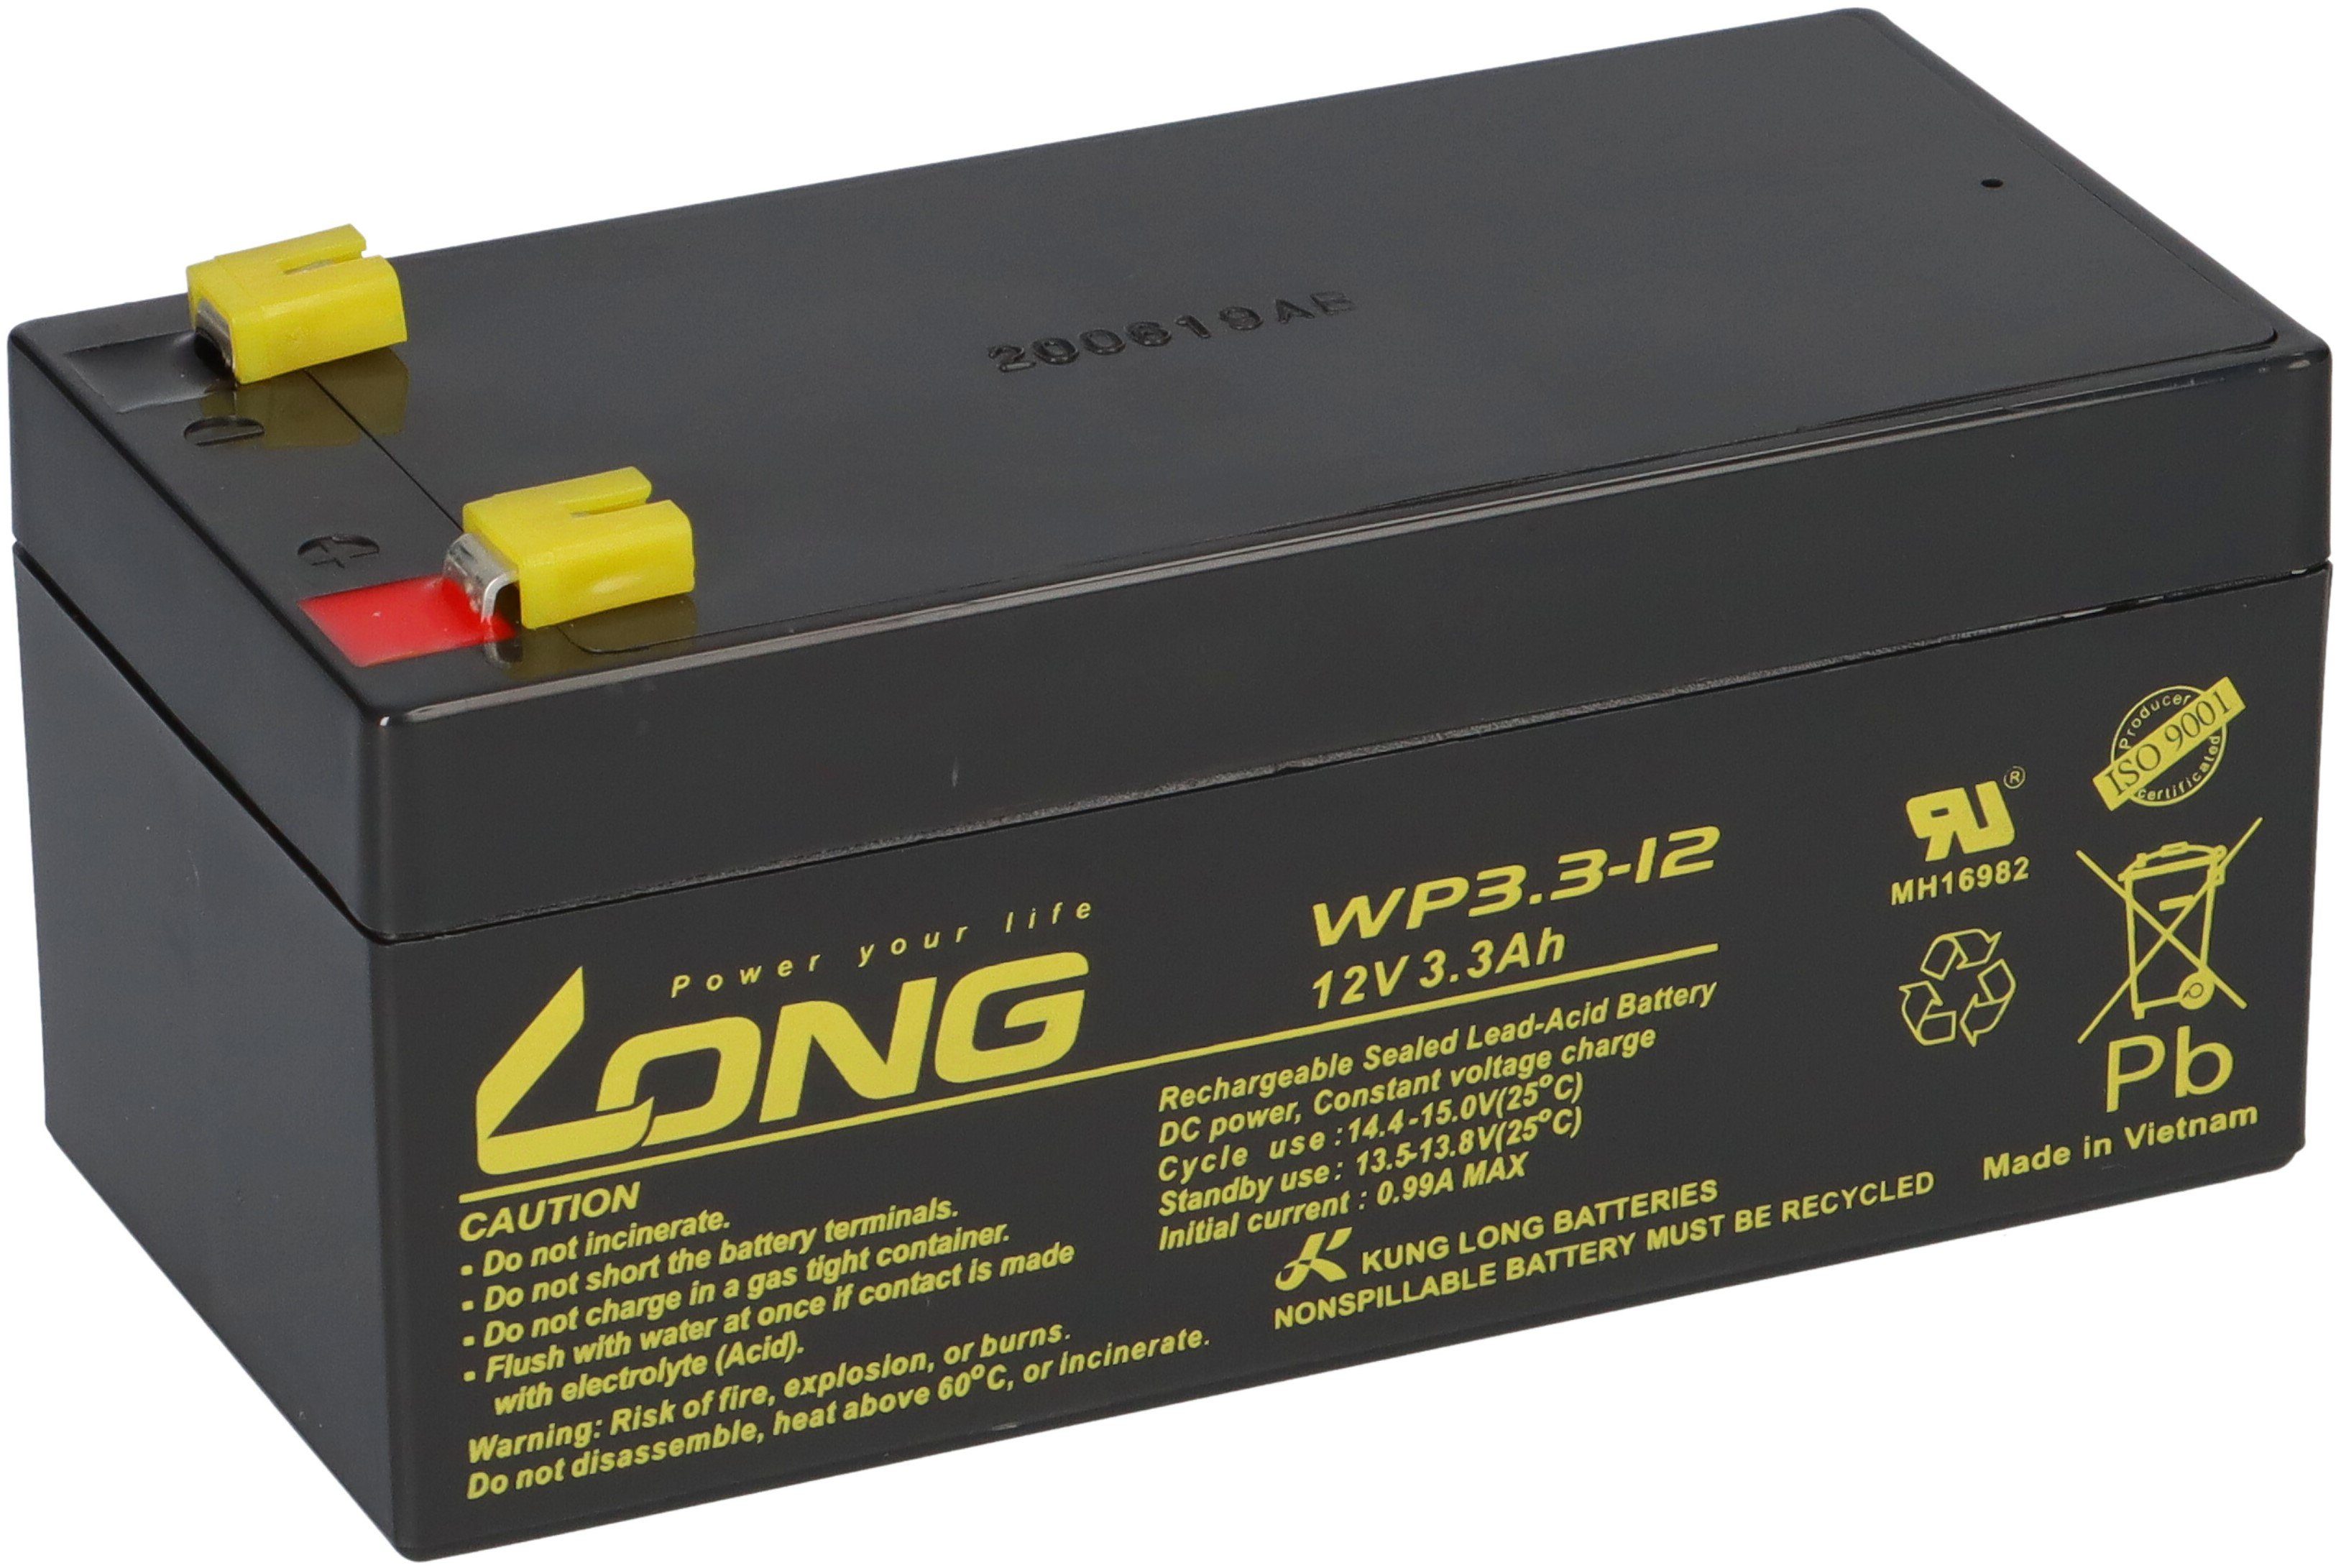 Kung Long Bleiakku BAT/BBB3 12V AGM battery Bleiakkus 3,3Ah VdS kompatibel